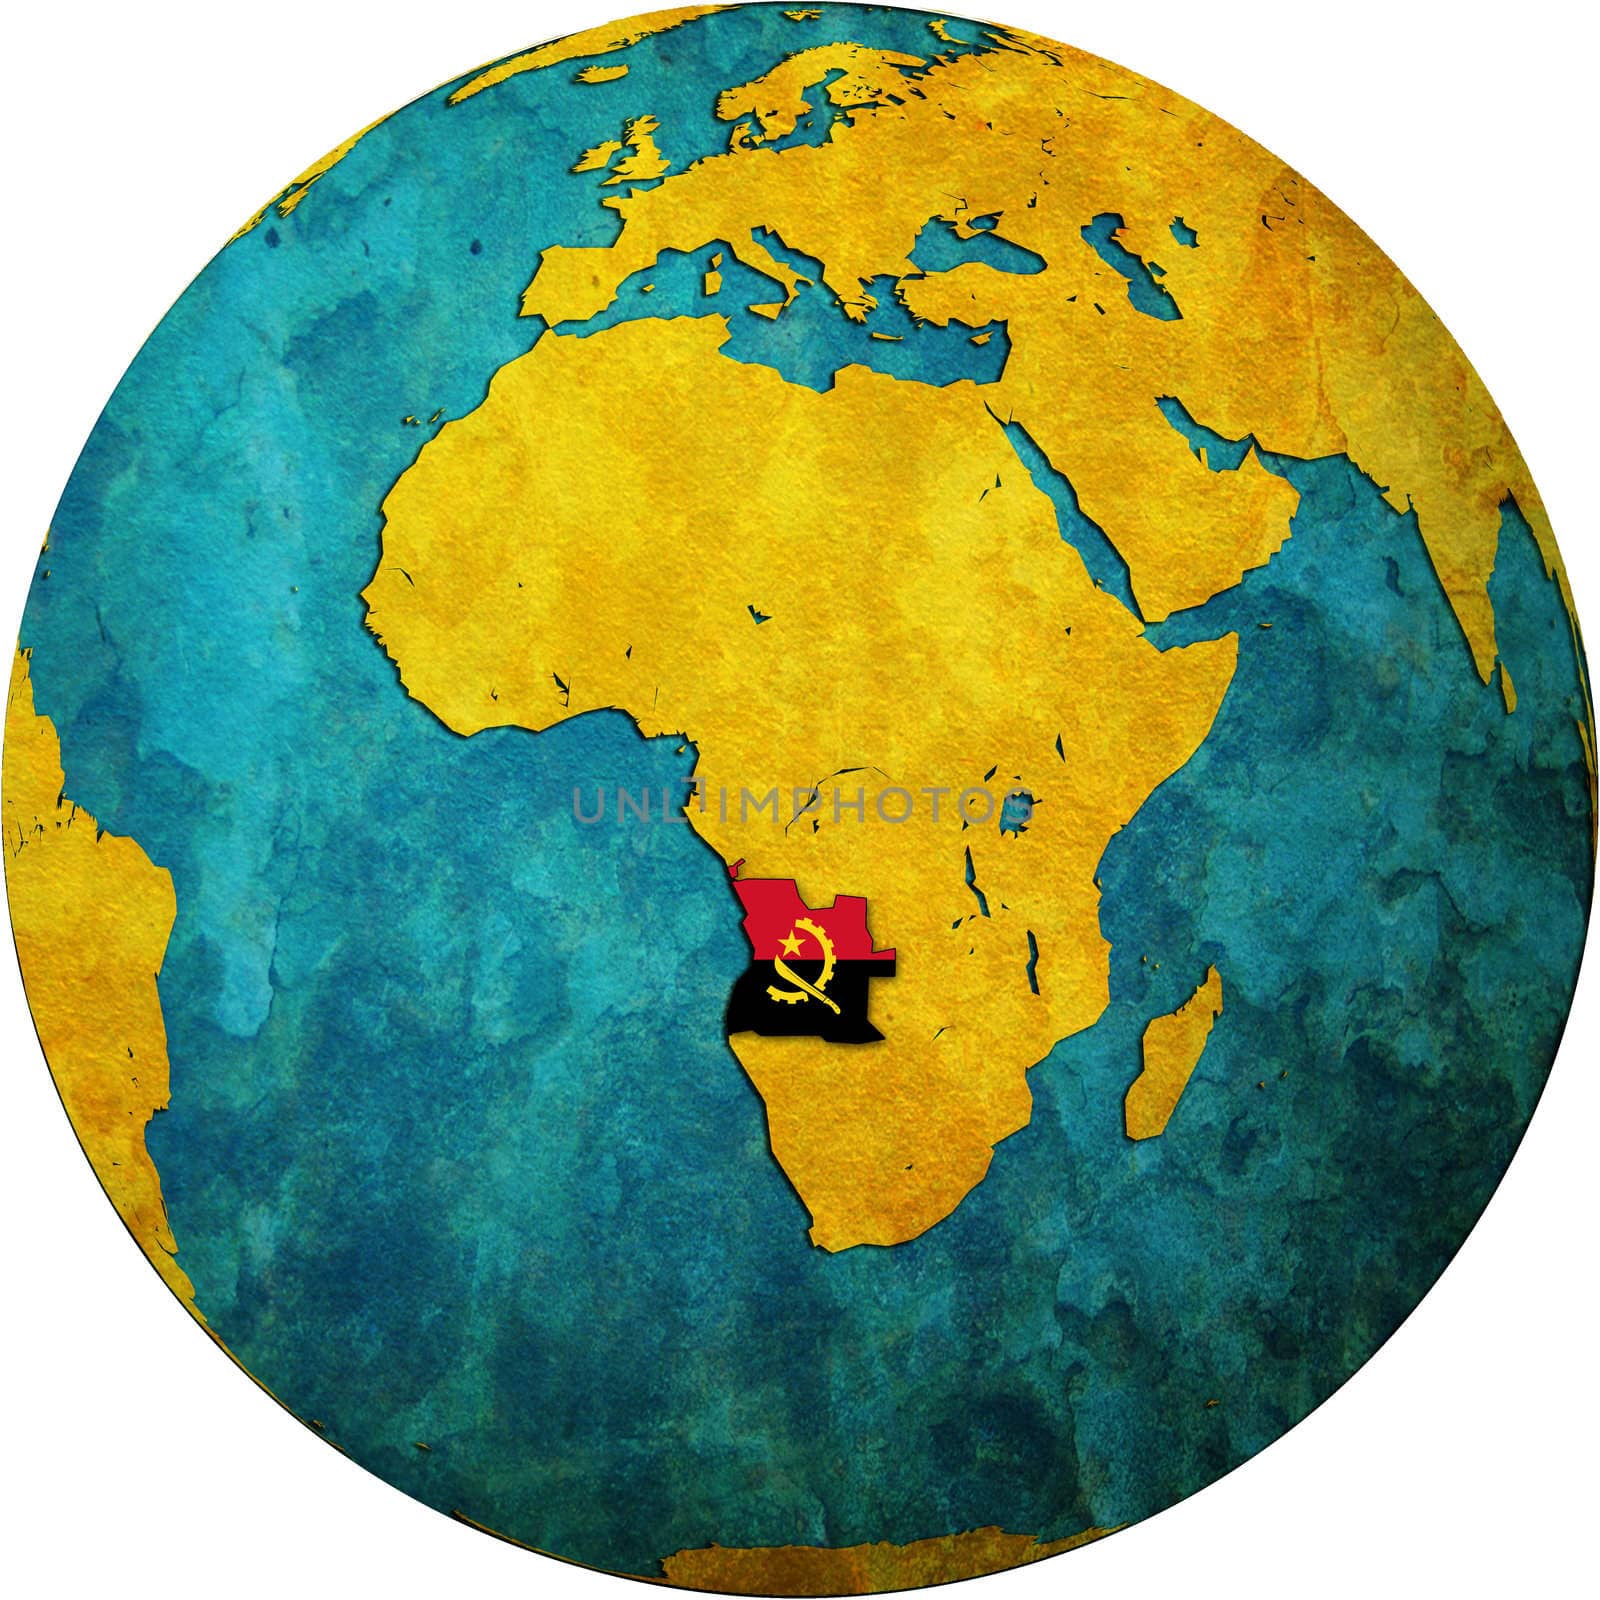 Angola territory and flag on map of globe